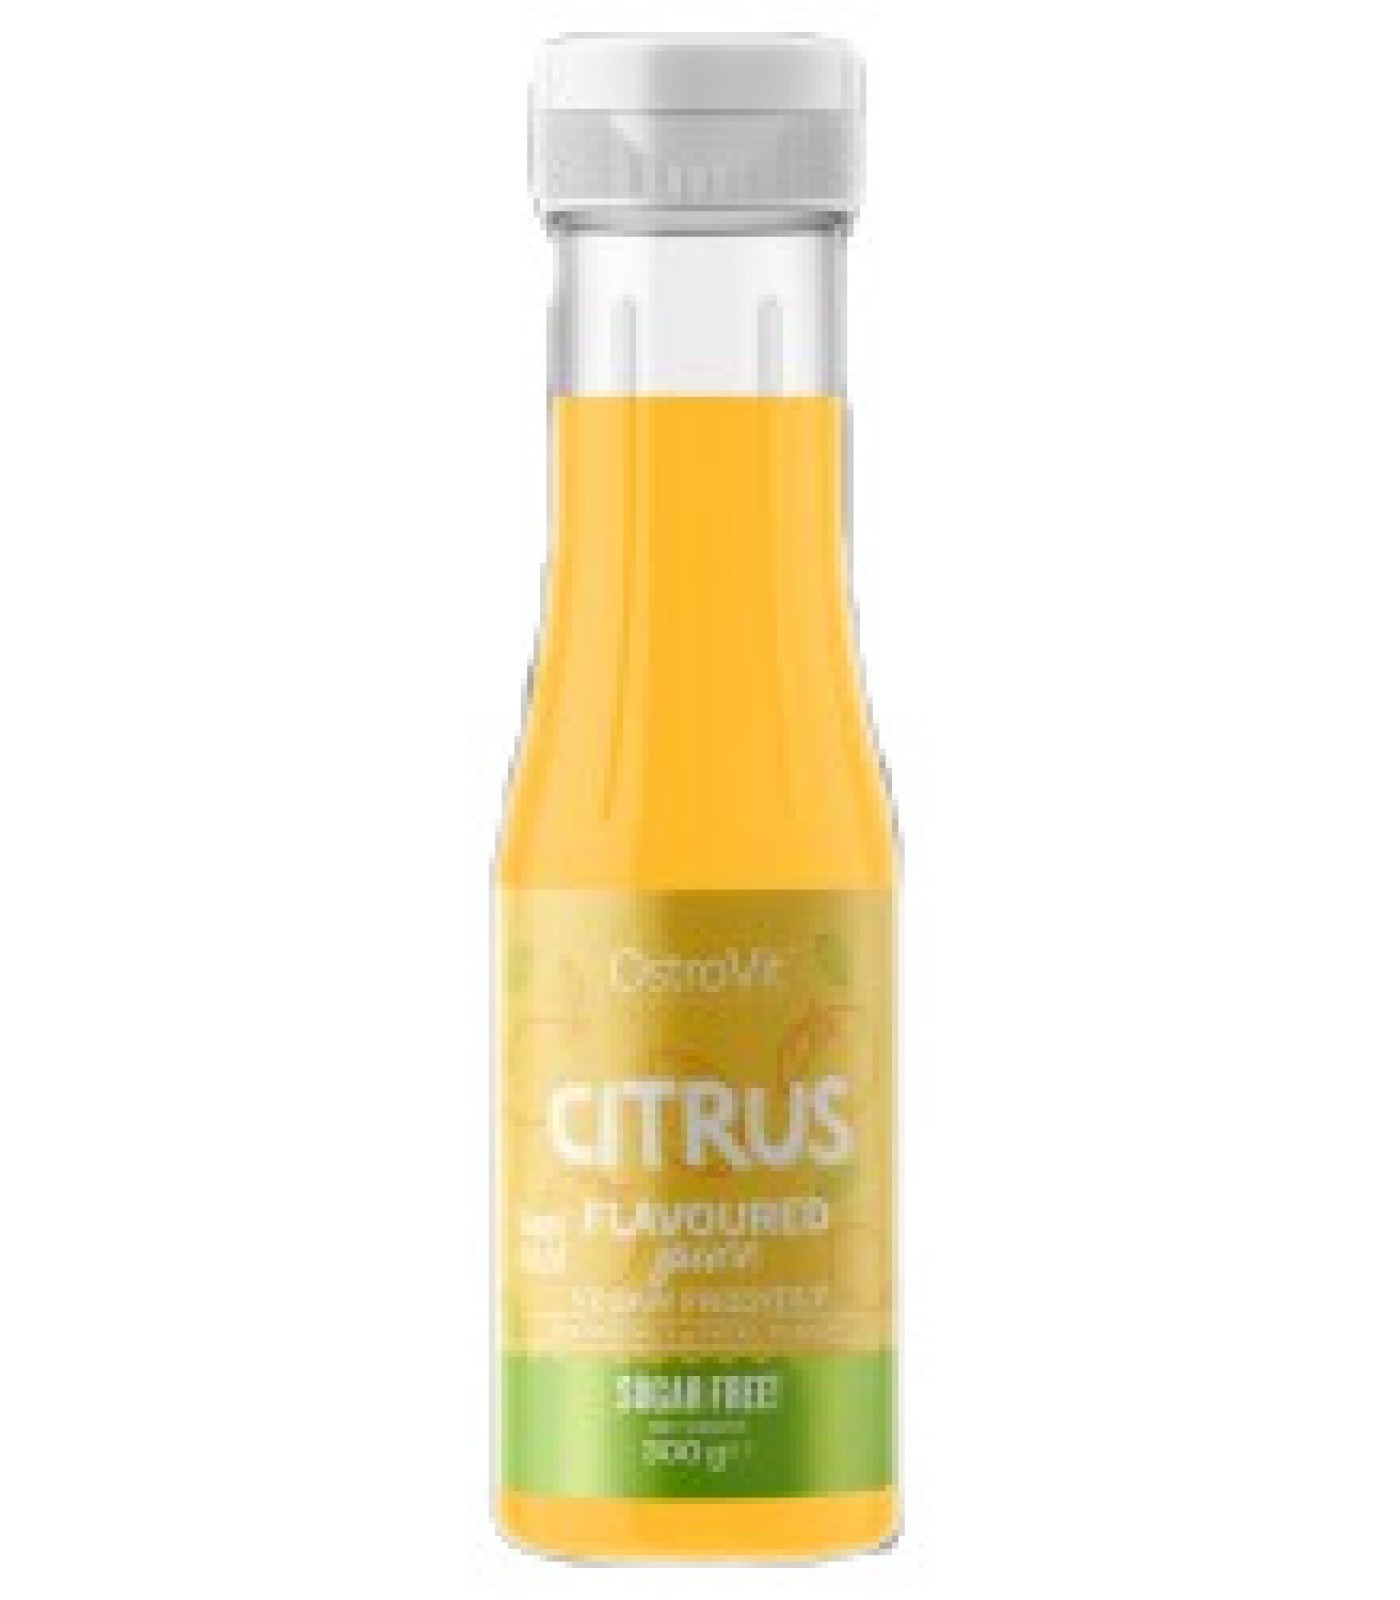 OstroVit - Citrus Flavored Sauce | Vegan Friendly - Zero Calorie / 300 мл